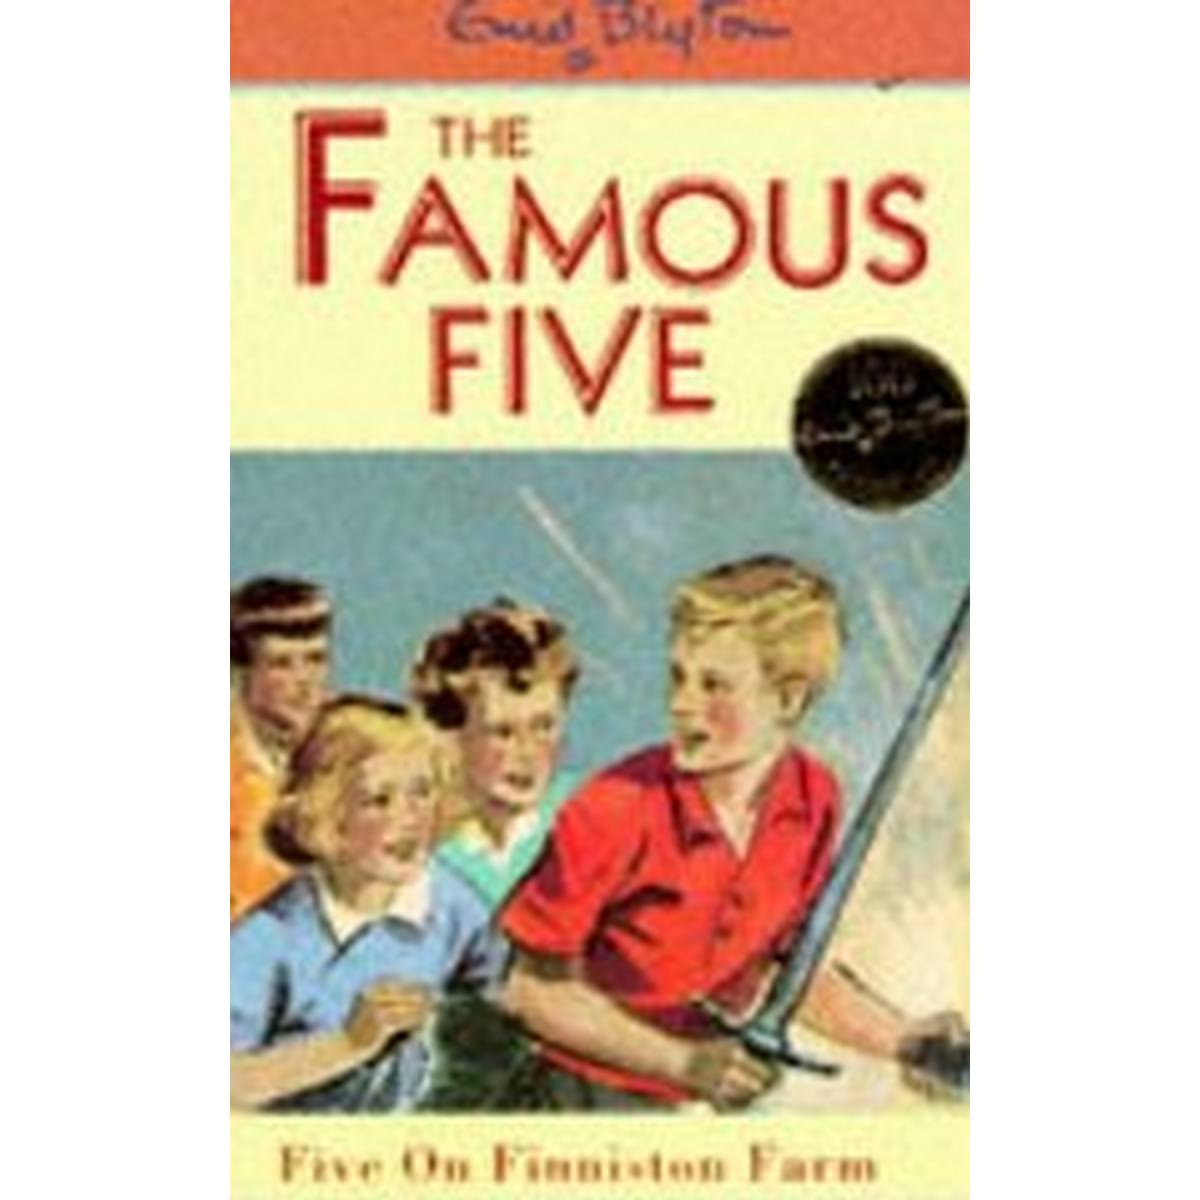 Five on Finniston Farm (Famous Five) 18